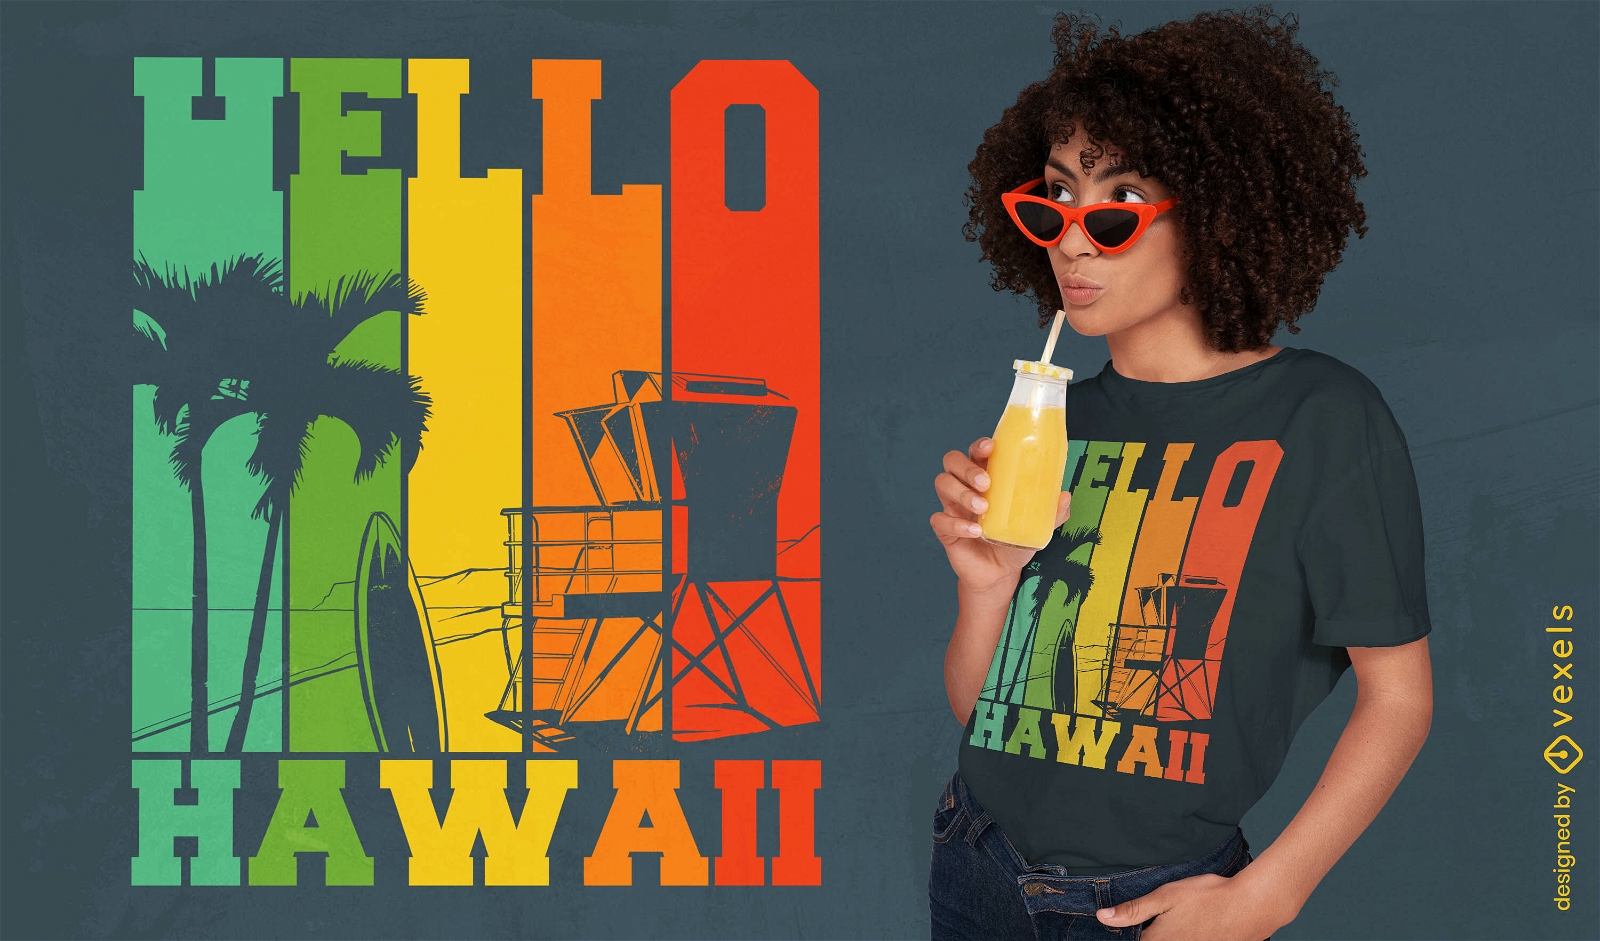 Aloha hawaii colorful t-shirt design